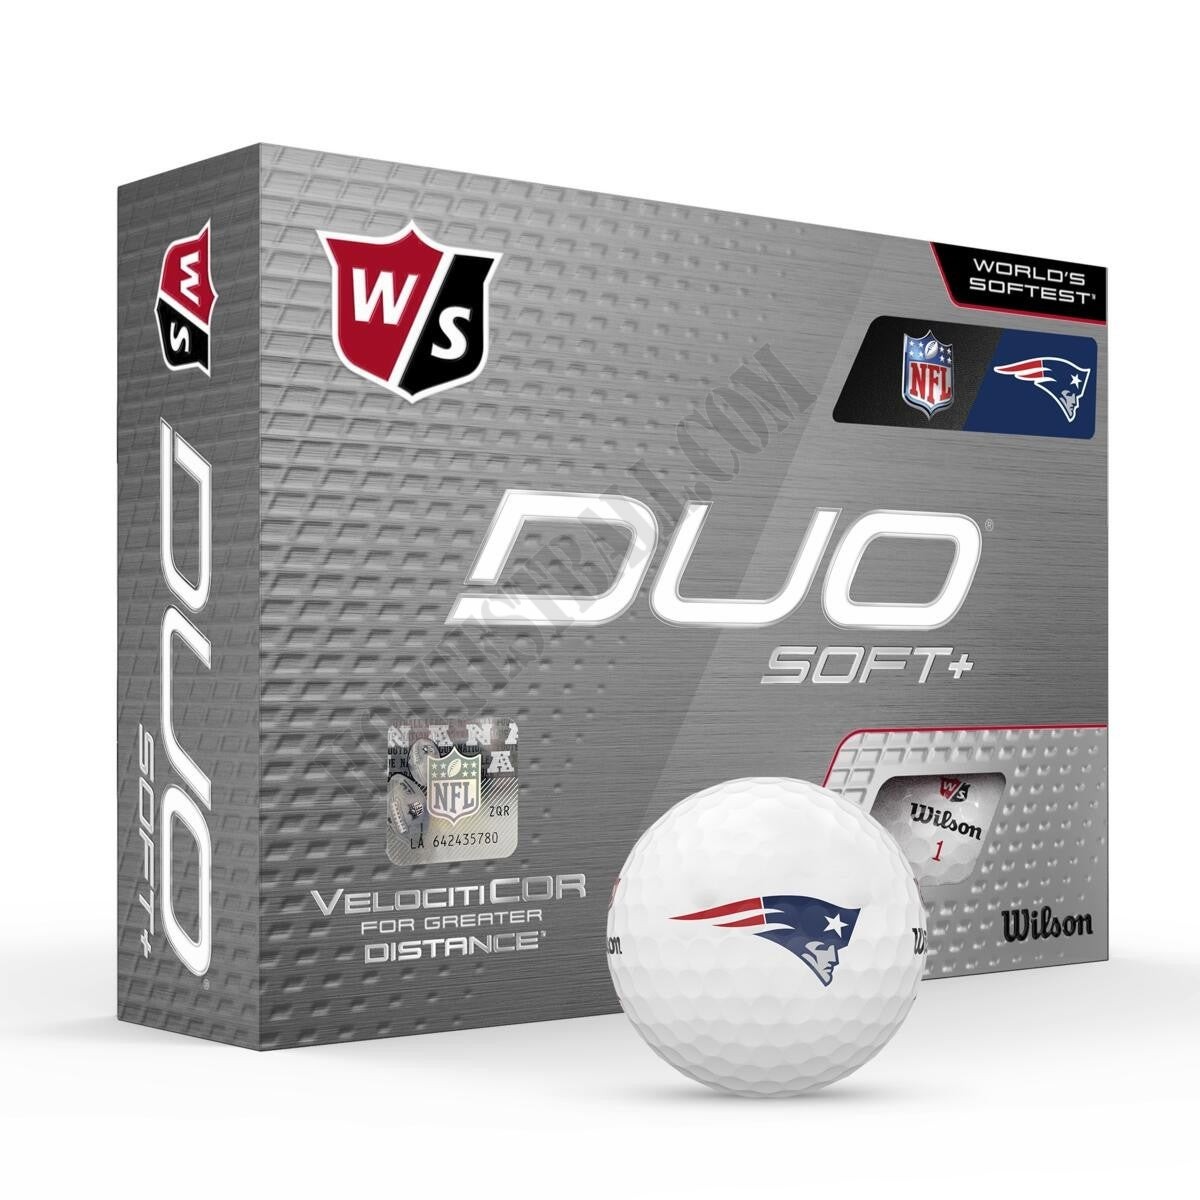 Duo Soft+ NFL Golf Balls - New England Patriots ● Wilson Promotions - Duo Soft+ NFL Golf Balls - New England Patriots ● Wilson Promotions